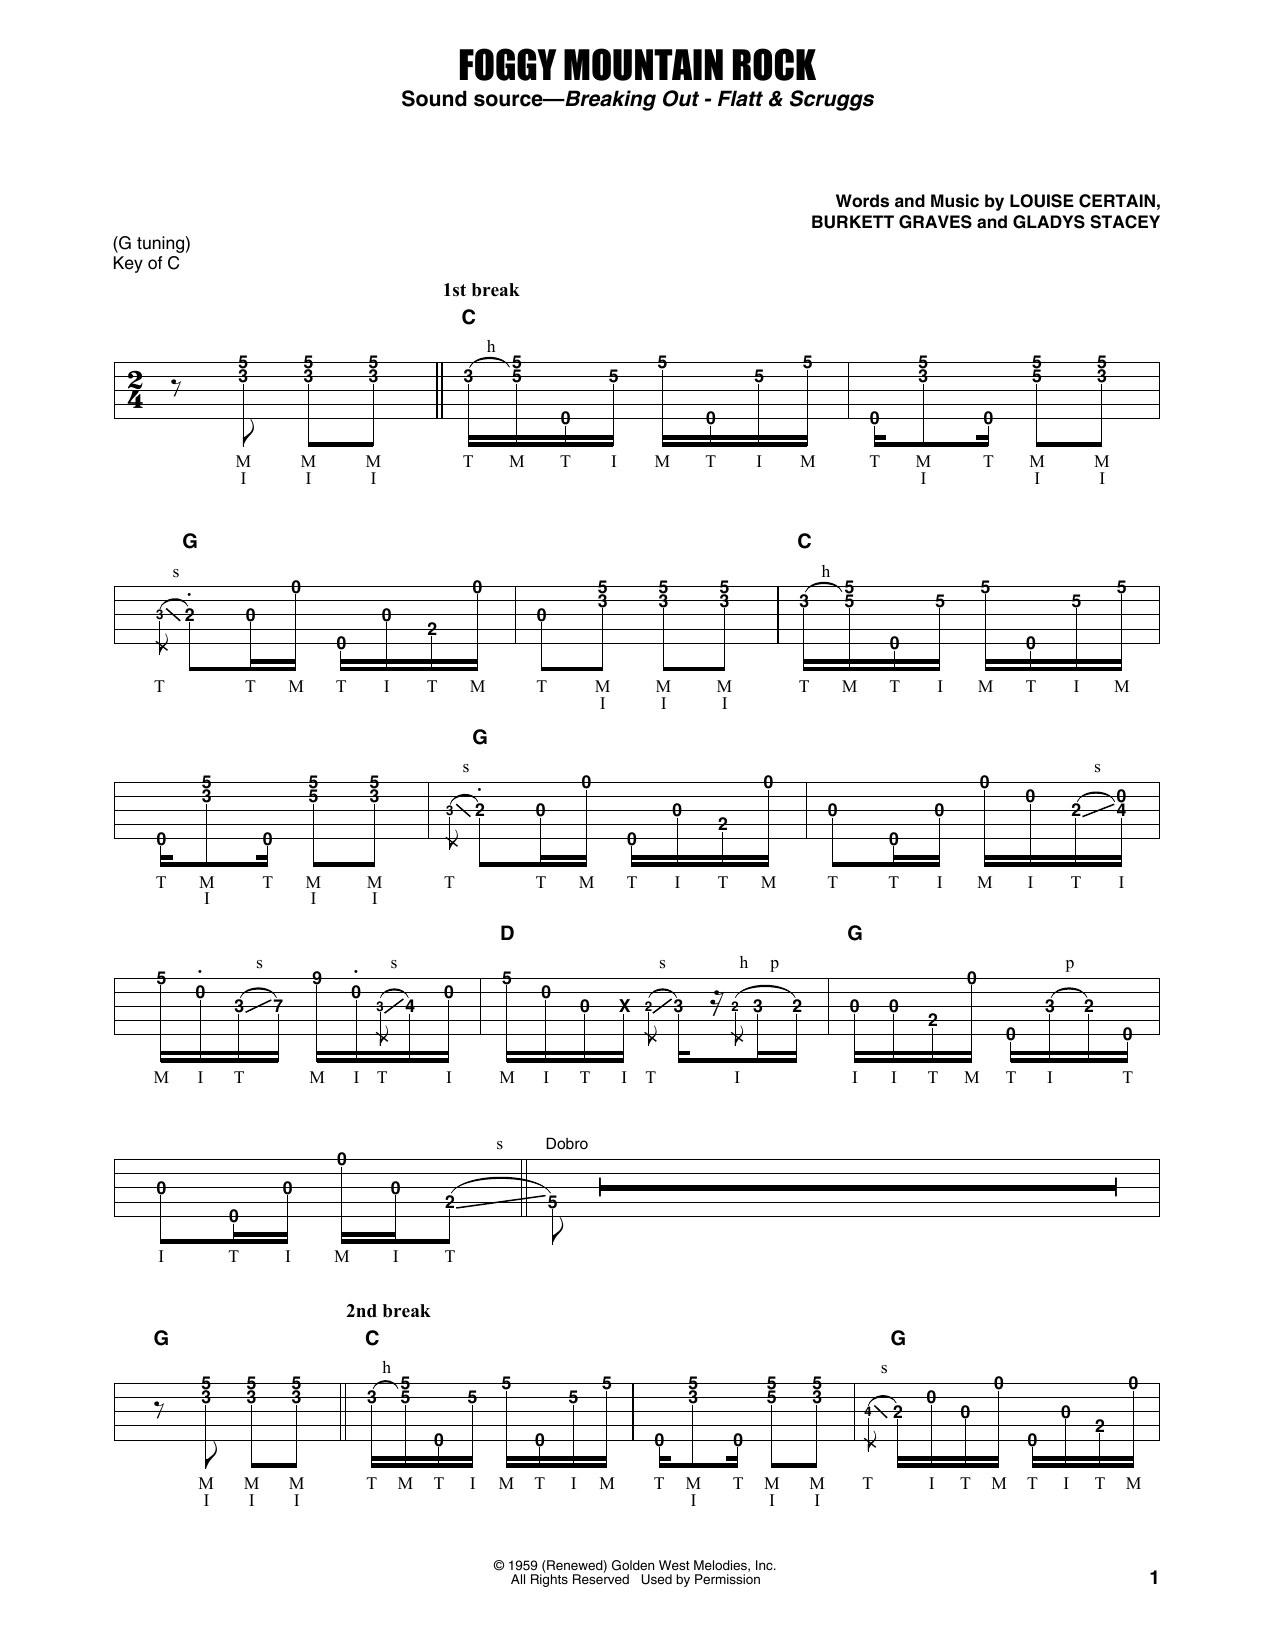 Flatt & Scruggs Foggy Mountain Rock Sheet Music Notes & Chords for Banjo Tab - Download or Print PDF